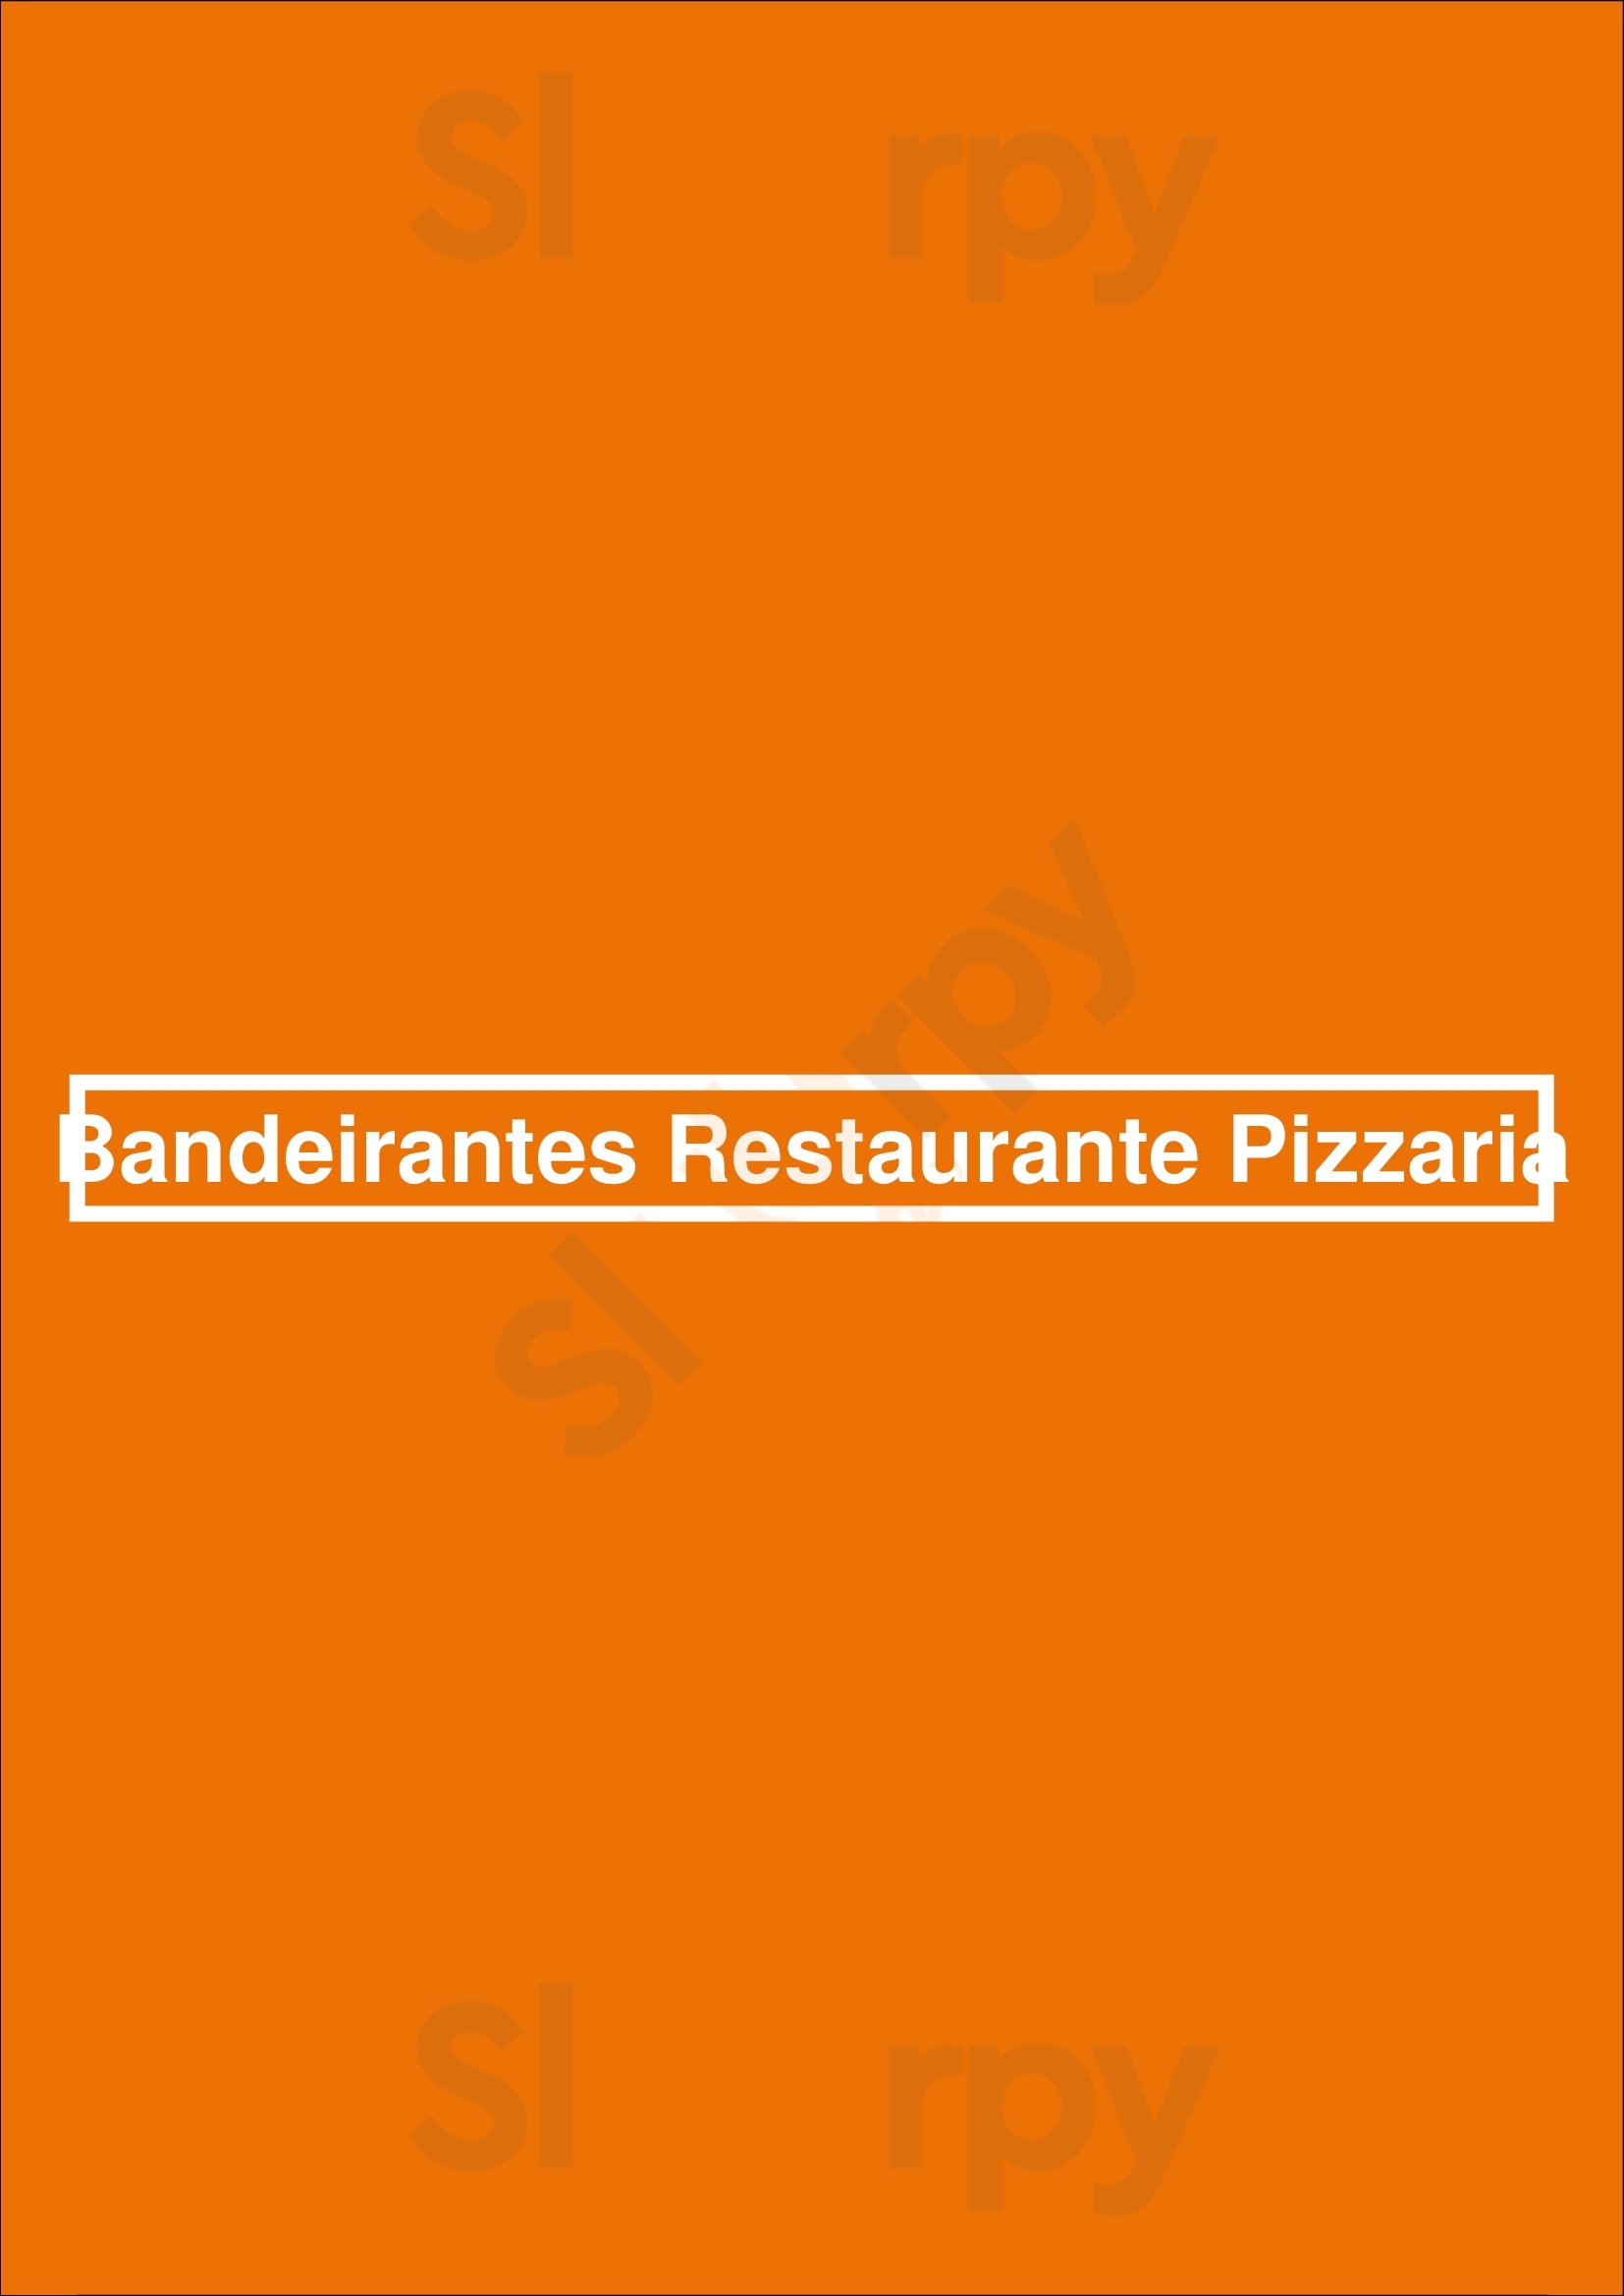 Bandeirantes Restaurante Pizzaria Lisboa Menu - 1